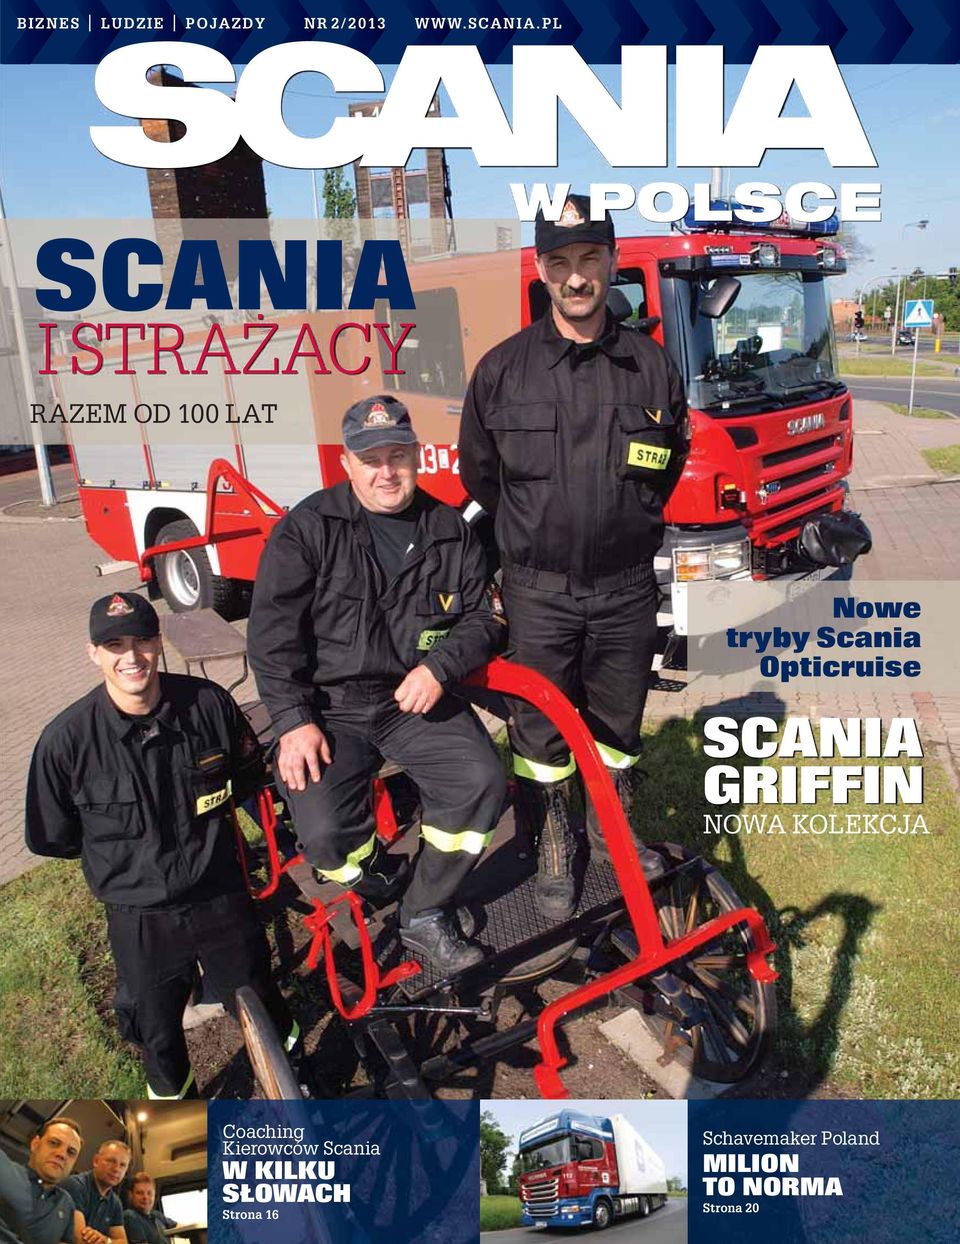 Scania Opticruise SCANIA GRIFFIN NOWA KOLEKCJA Coaching